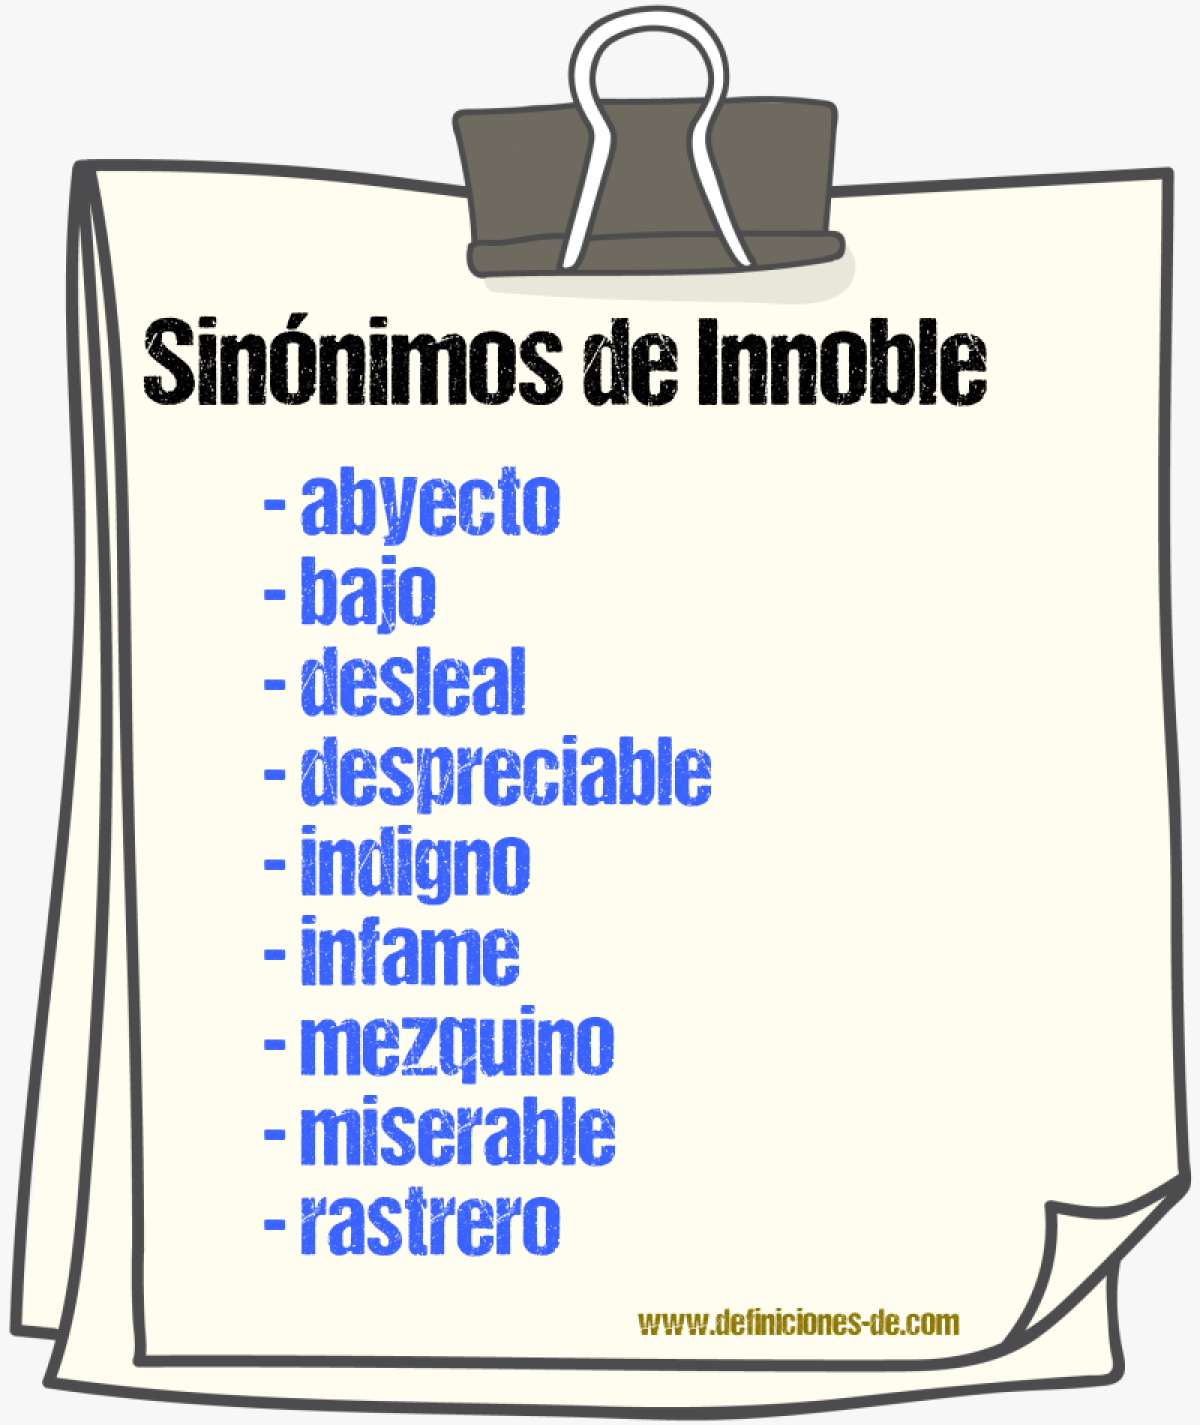 Sinónimos de innoble